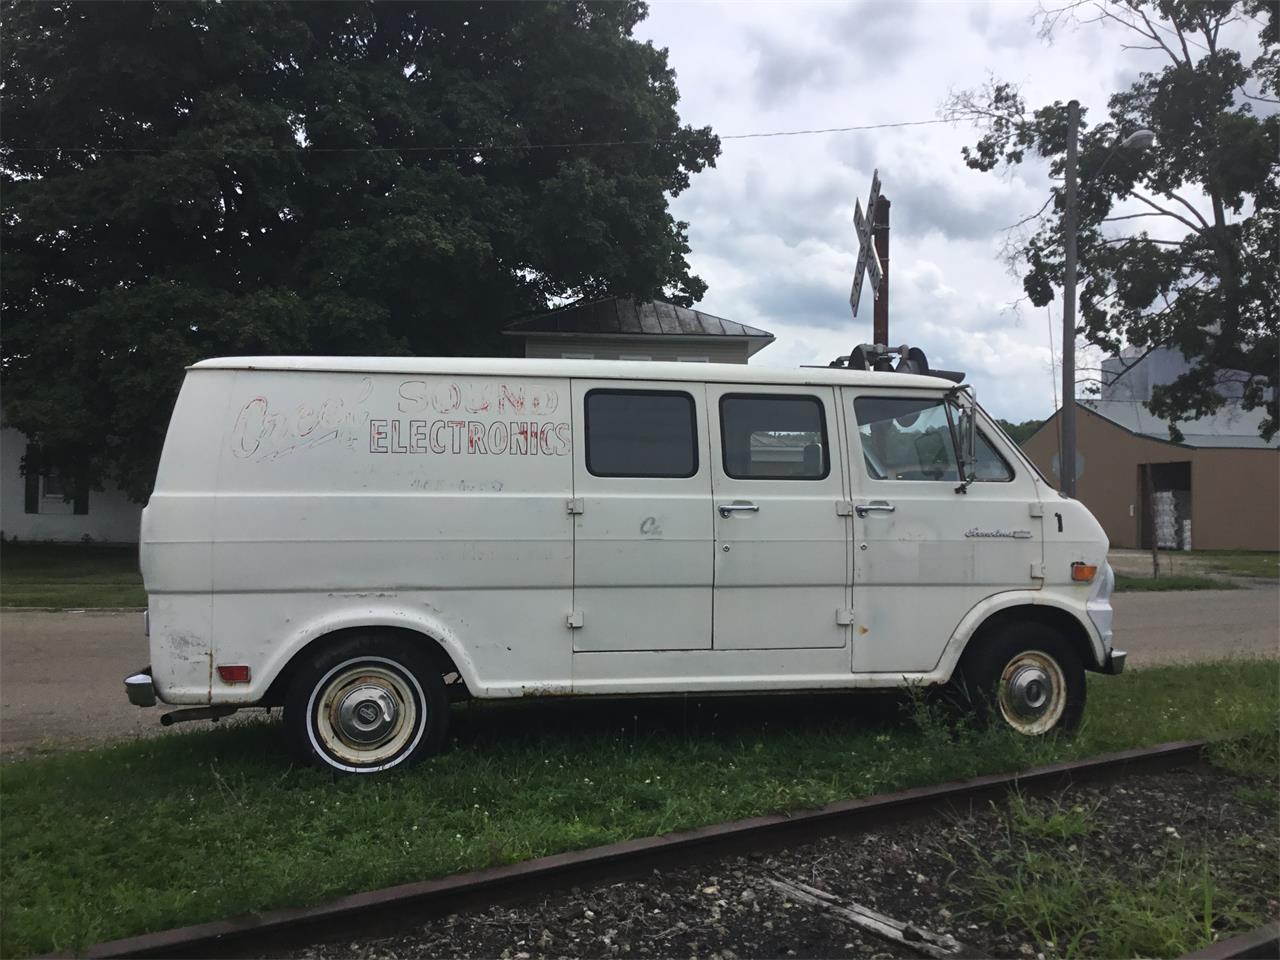 1969 ford econoline van for sale